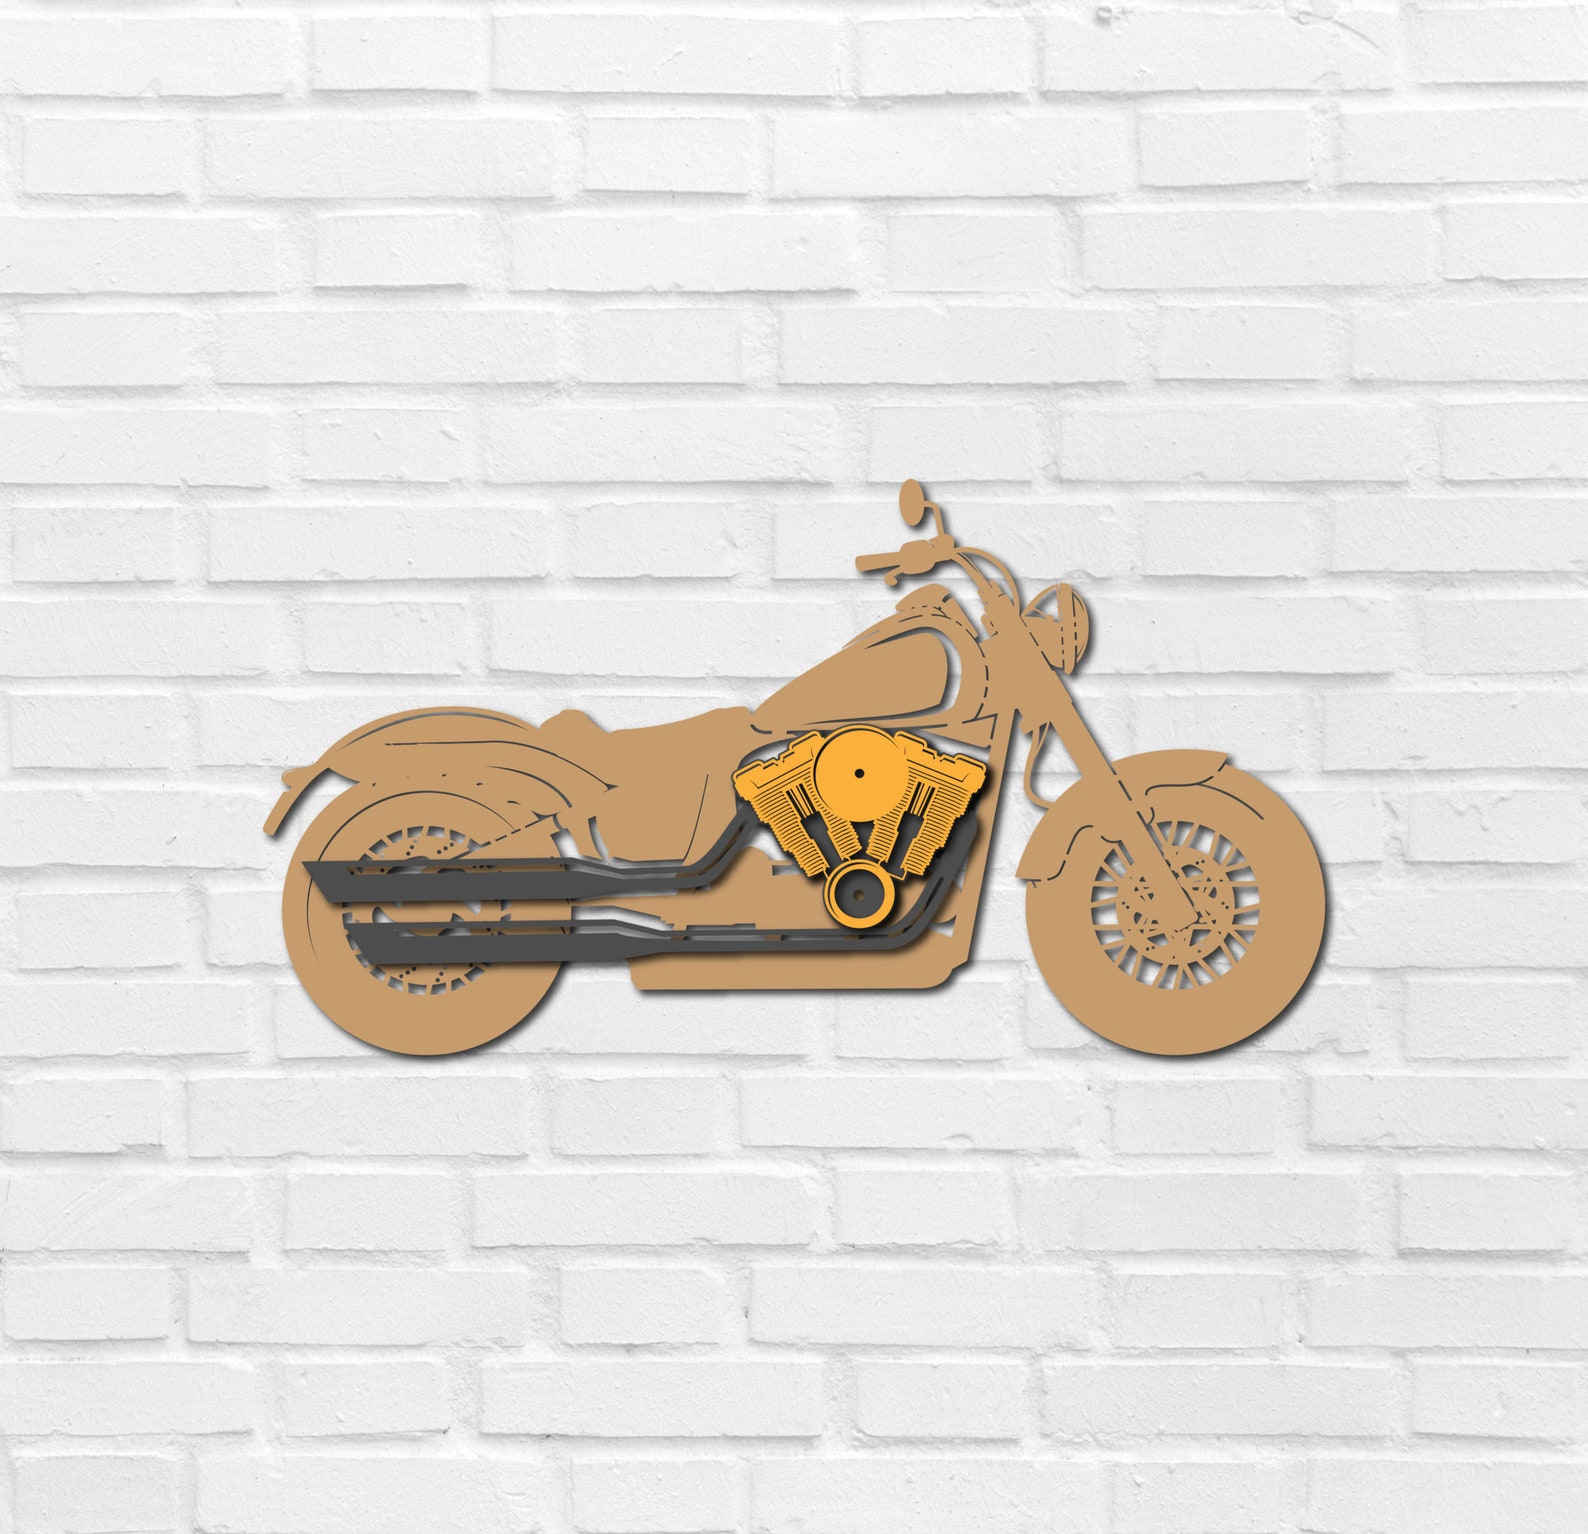 Cover image of Harley Davidson Motorcycle Cricut SVG.